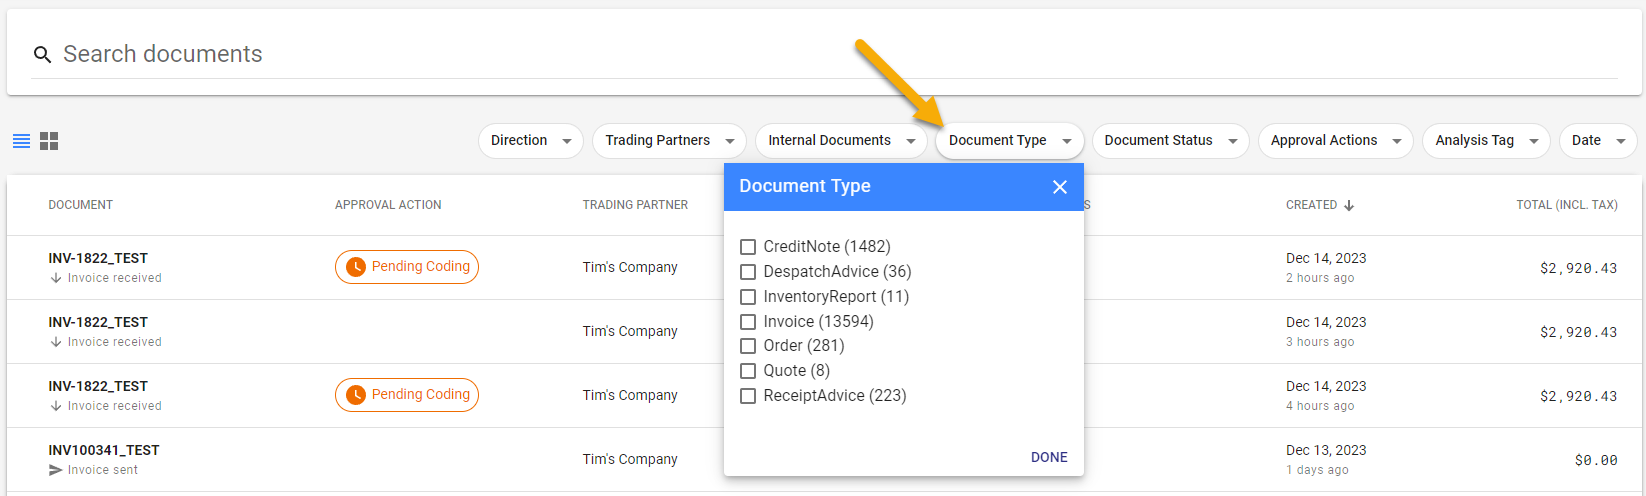 Document Type Filter